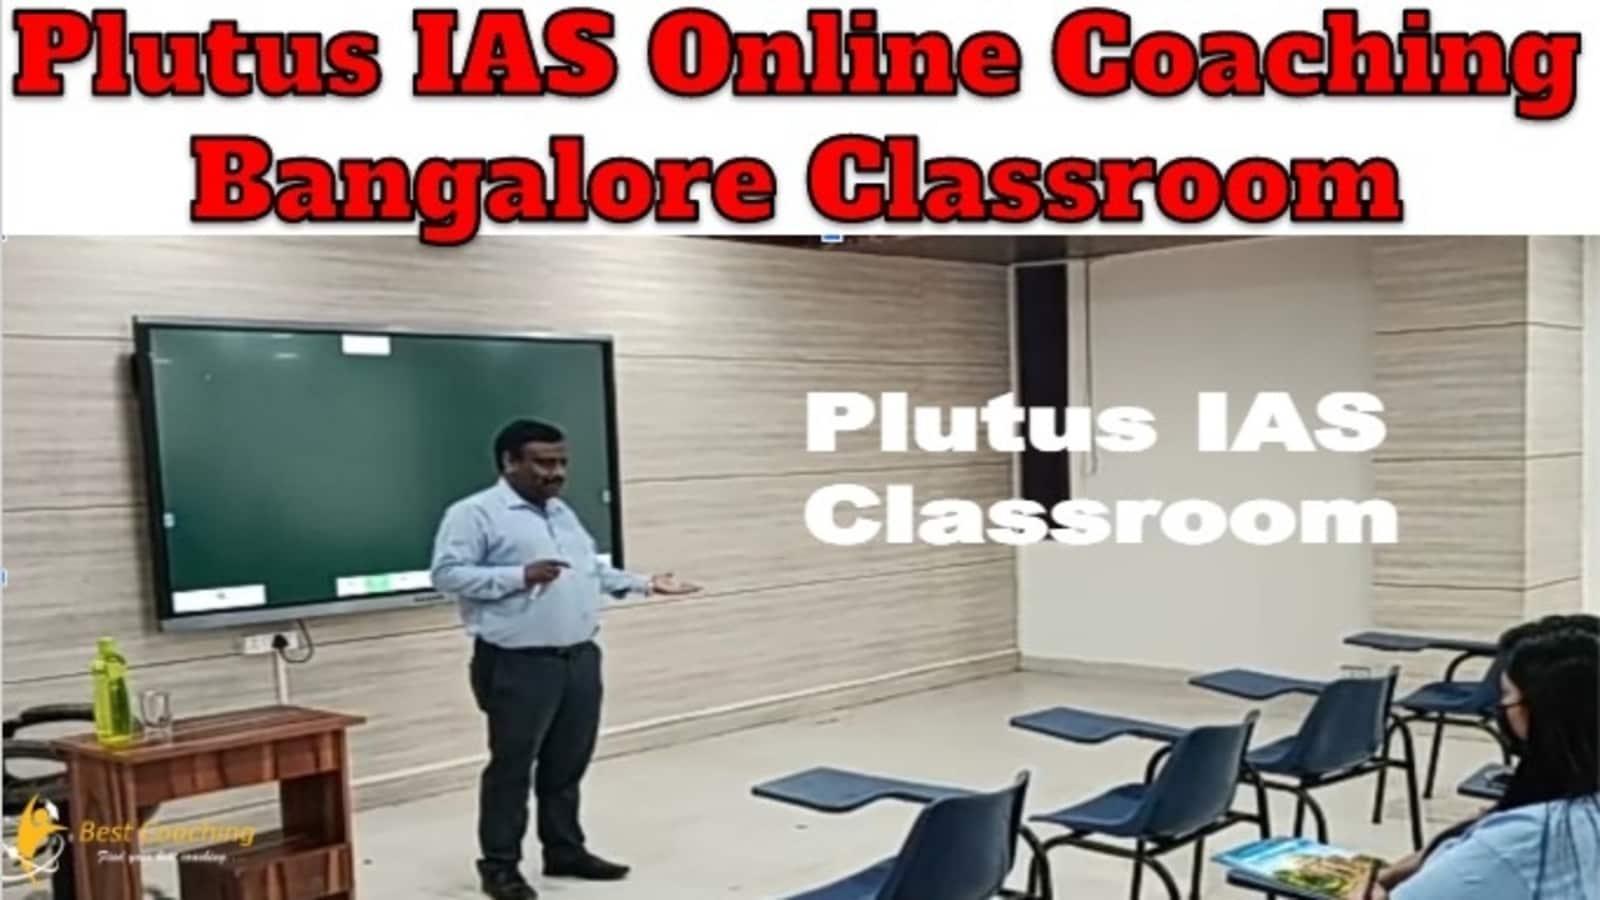 Plutus IAS Online Coaching Bangalore Classroom